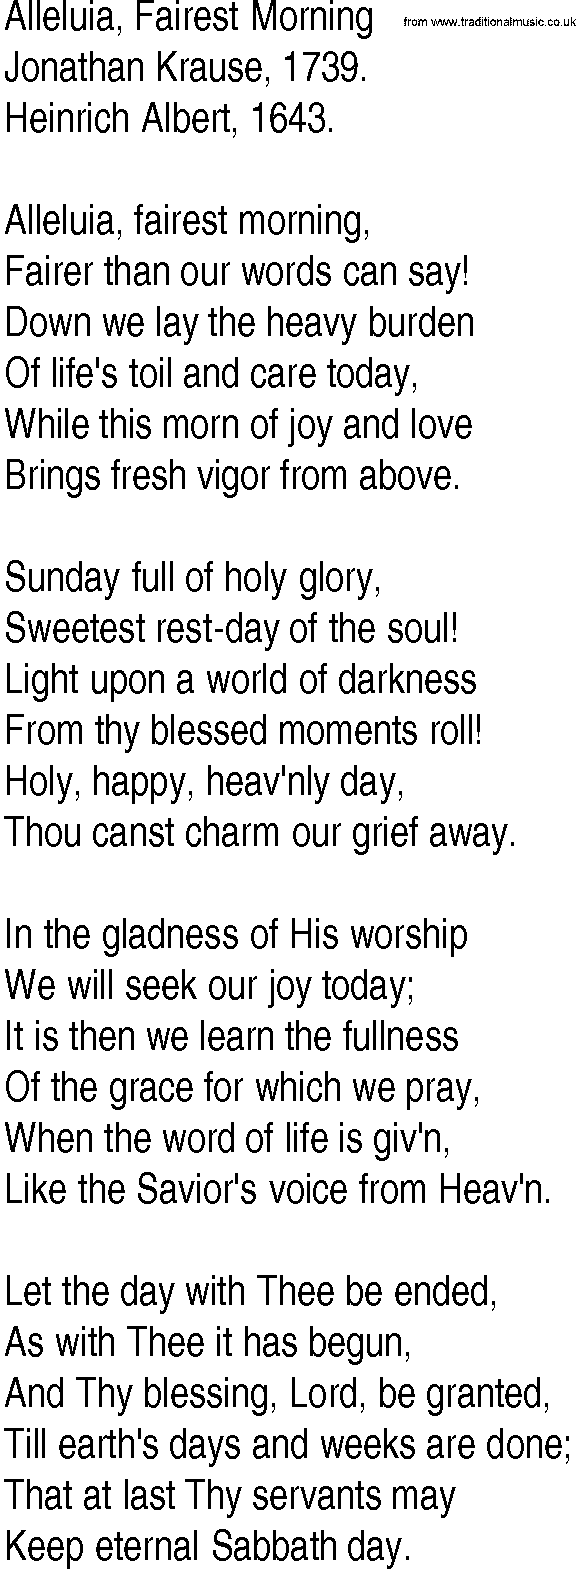 Hymn and Gospel Song: Alleluia, Fairest Morning by Jonathan Krause lyrics